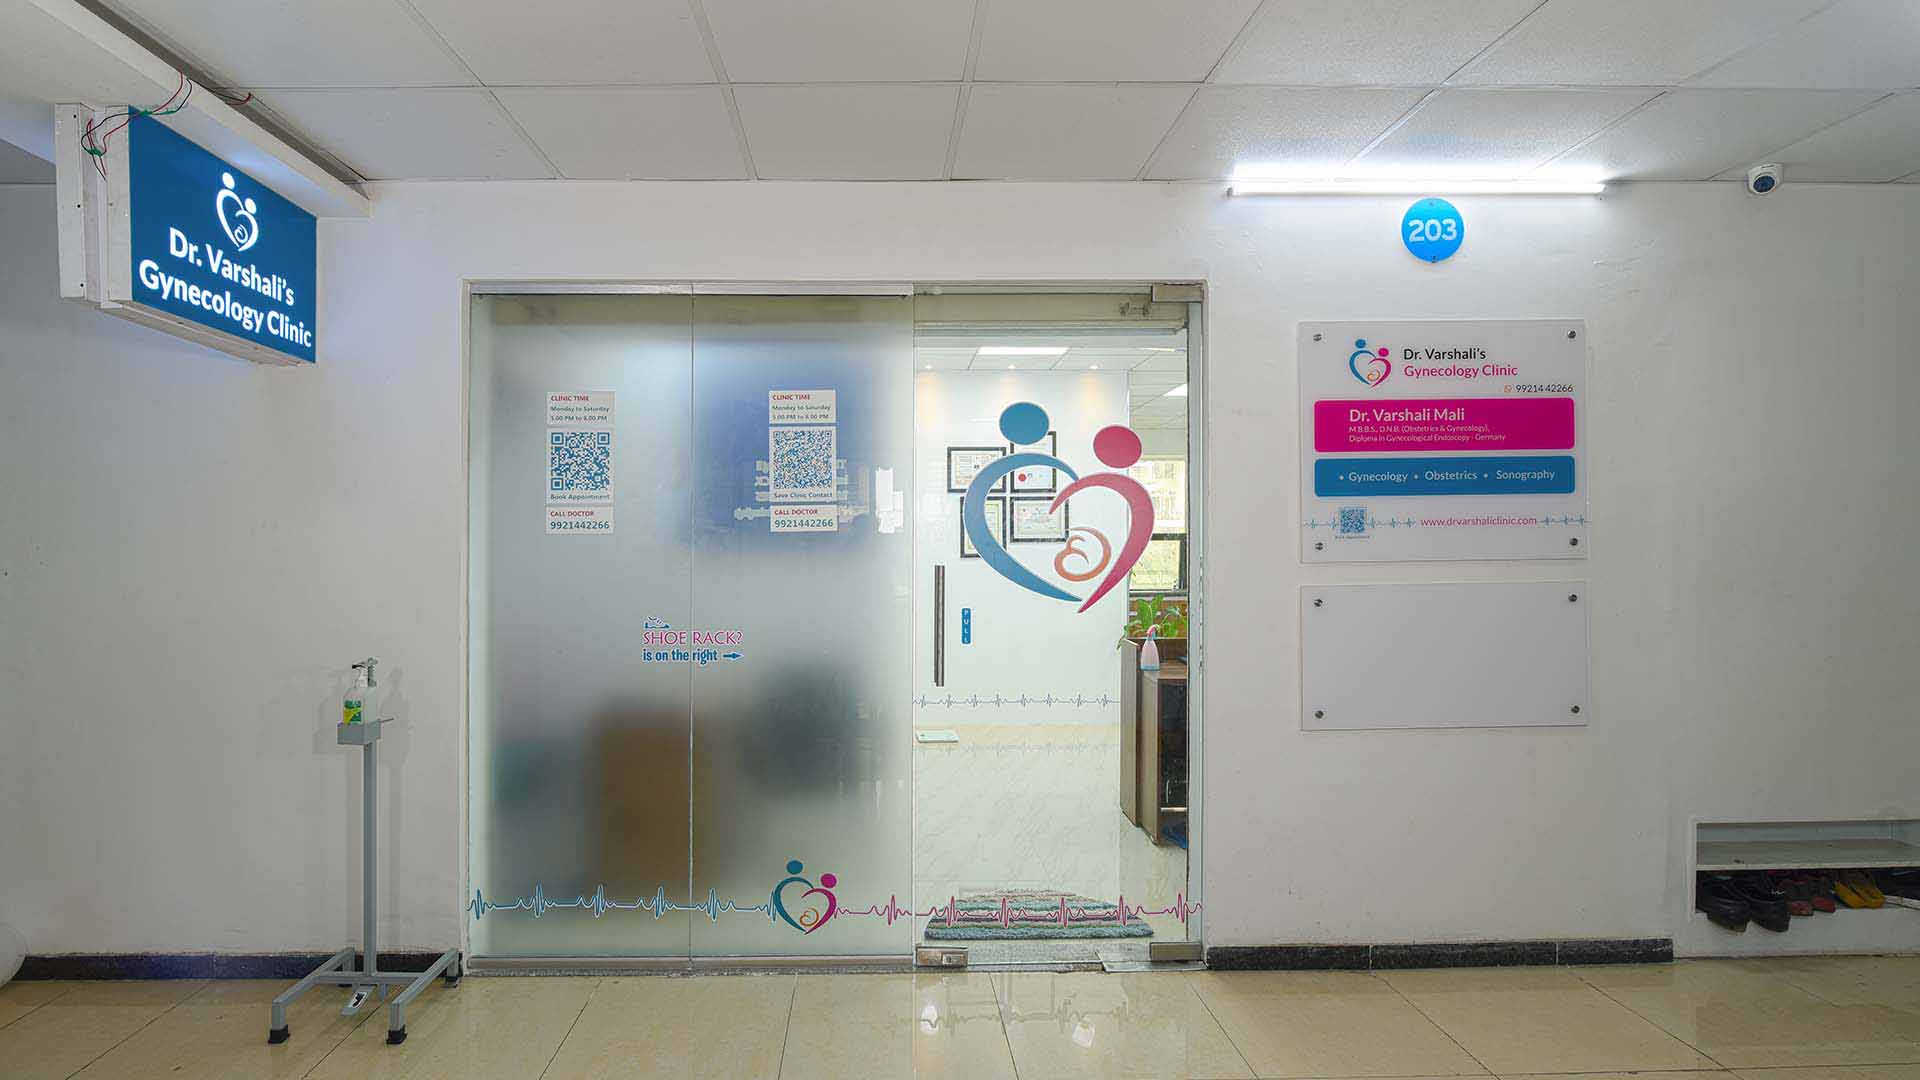 Entrance at Dr. Varshali's Gynecology Clinic